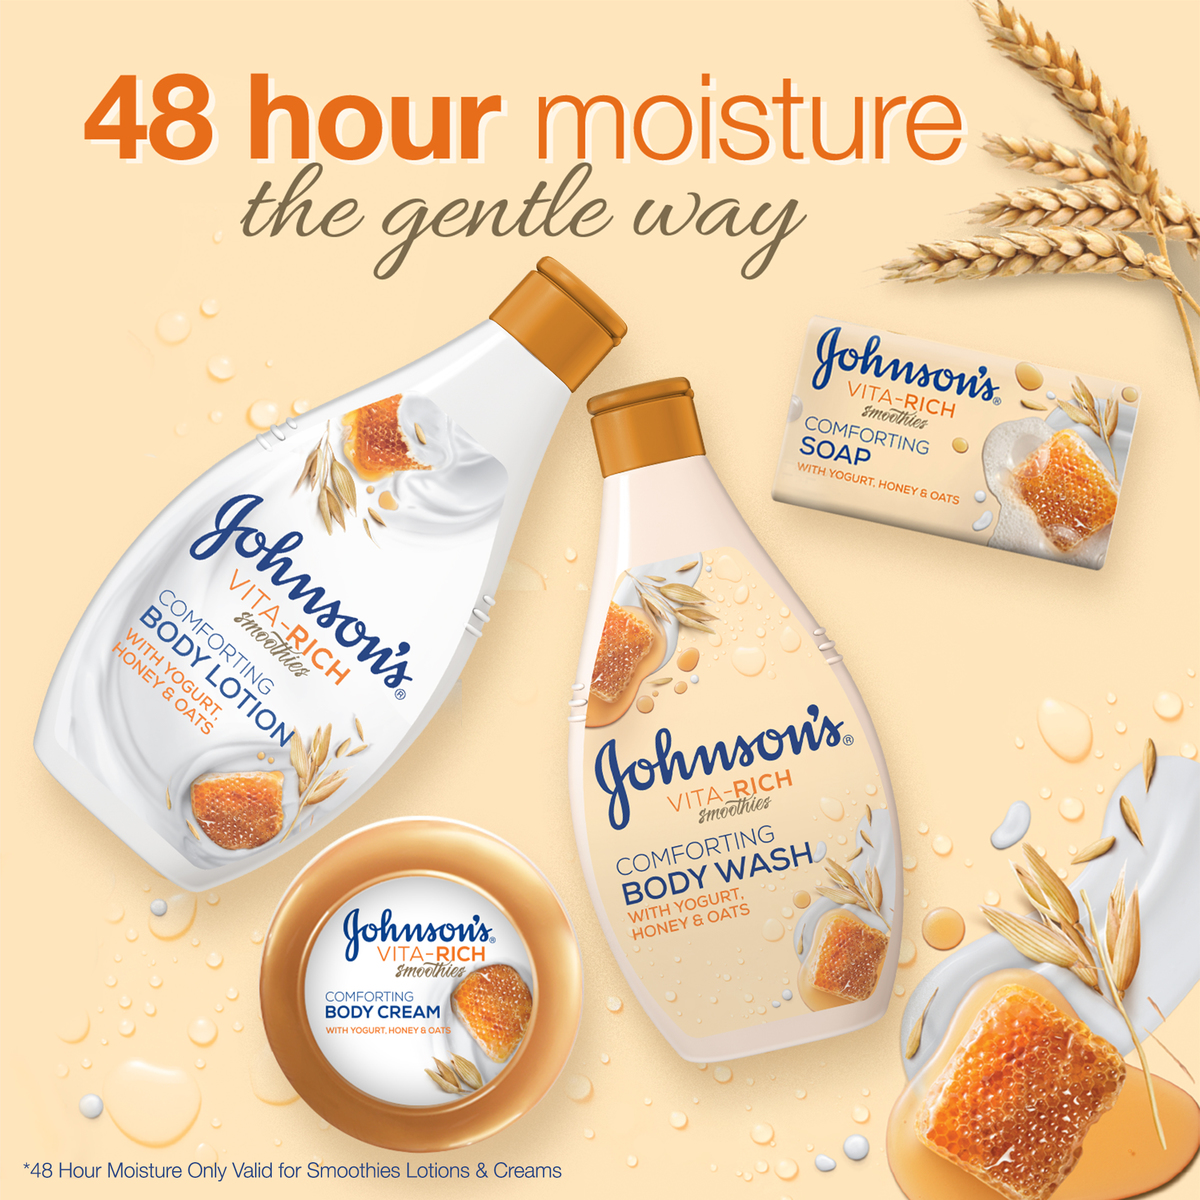 Johnson's Body Soap Vita-Rich Smoothies Comforting 125 g